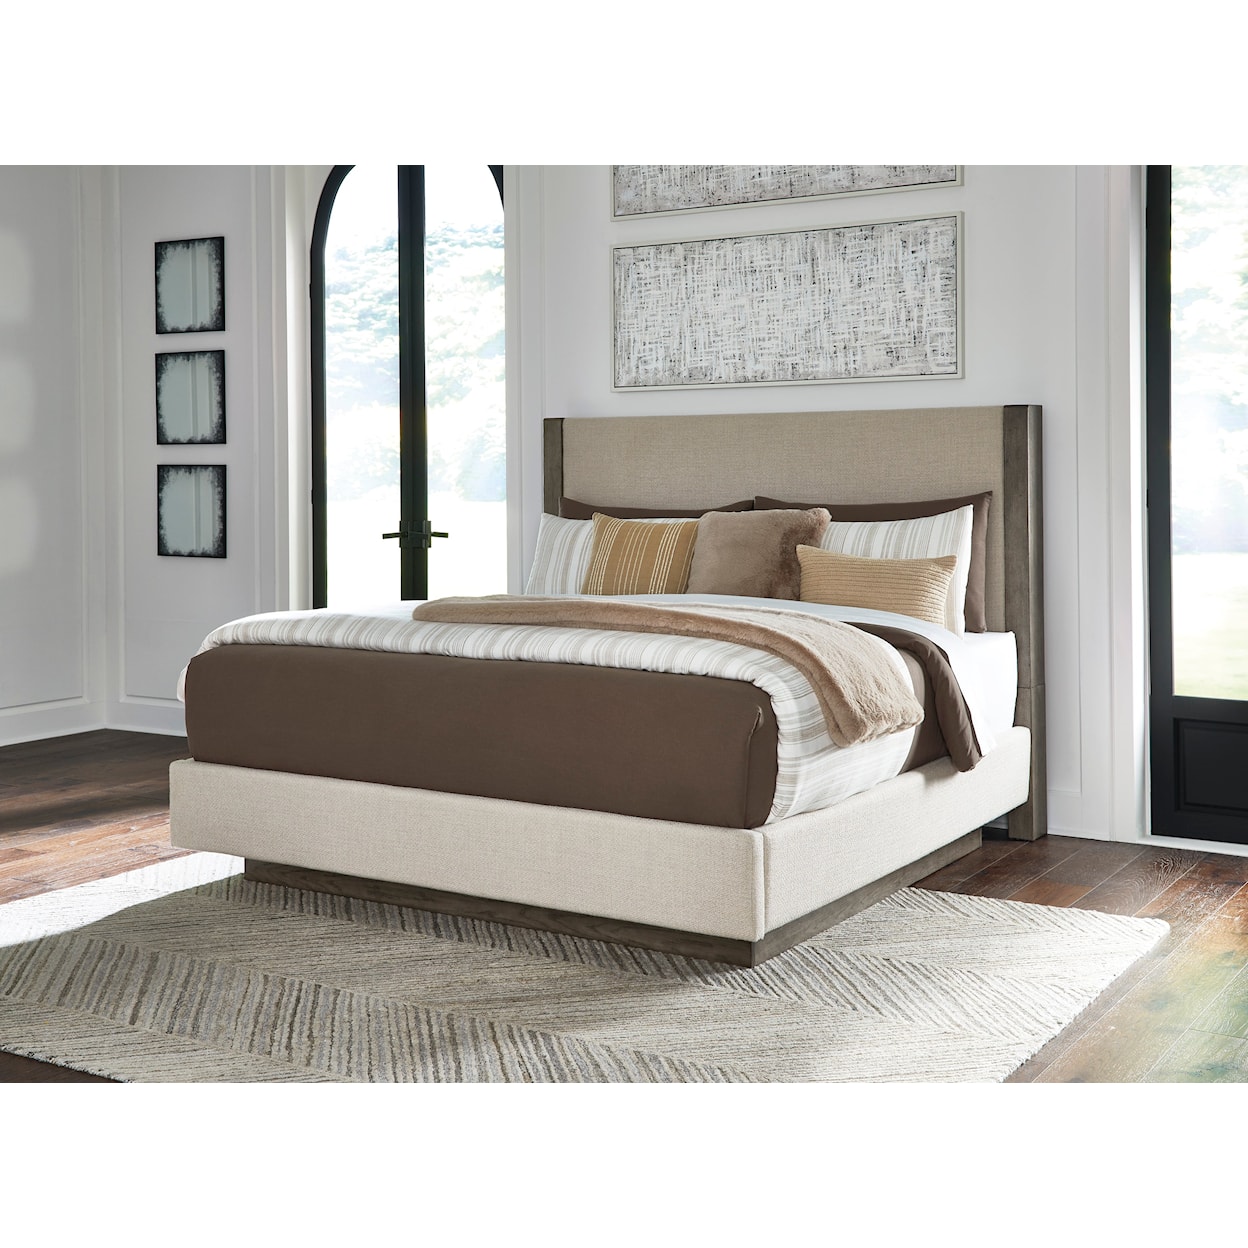 Ashley Furniture Benchcraft Anibecca King Upholstered Bed